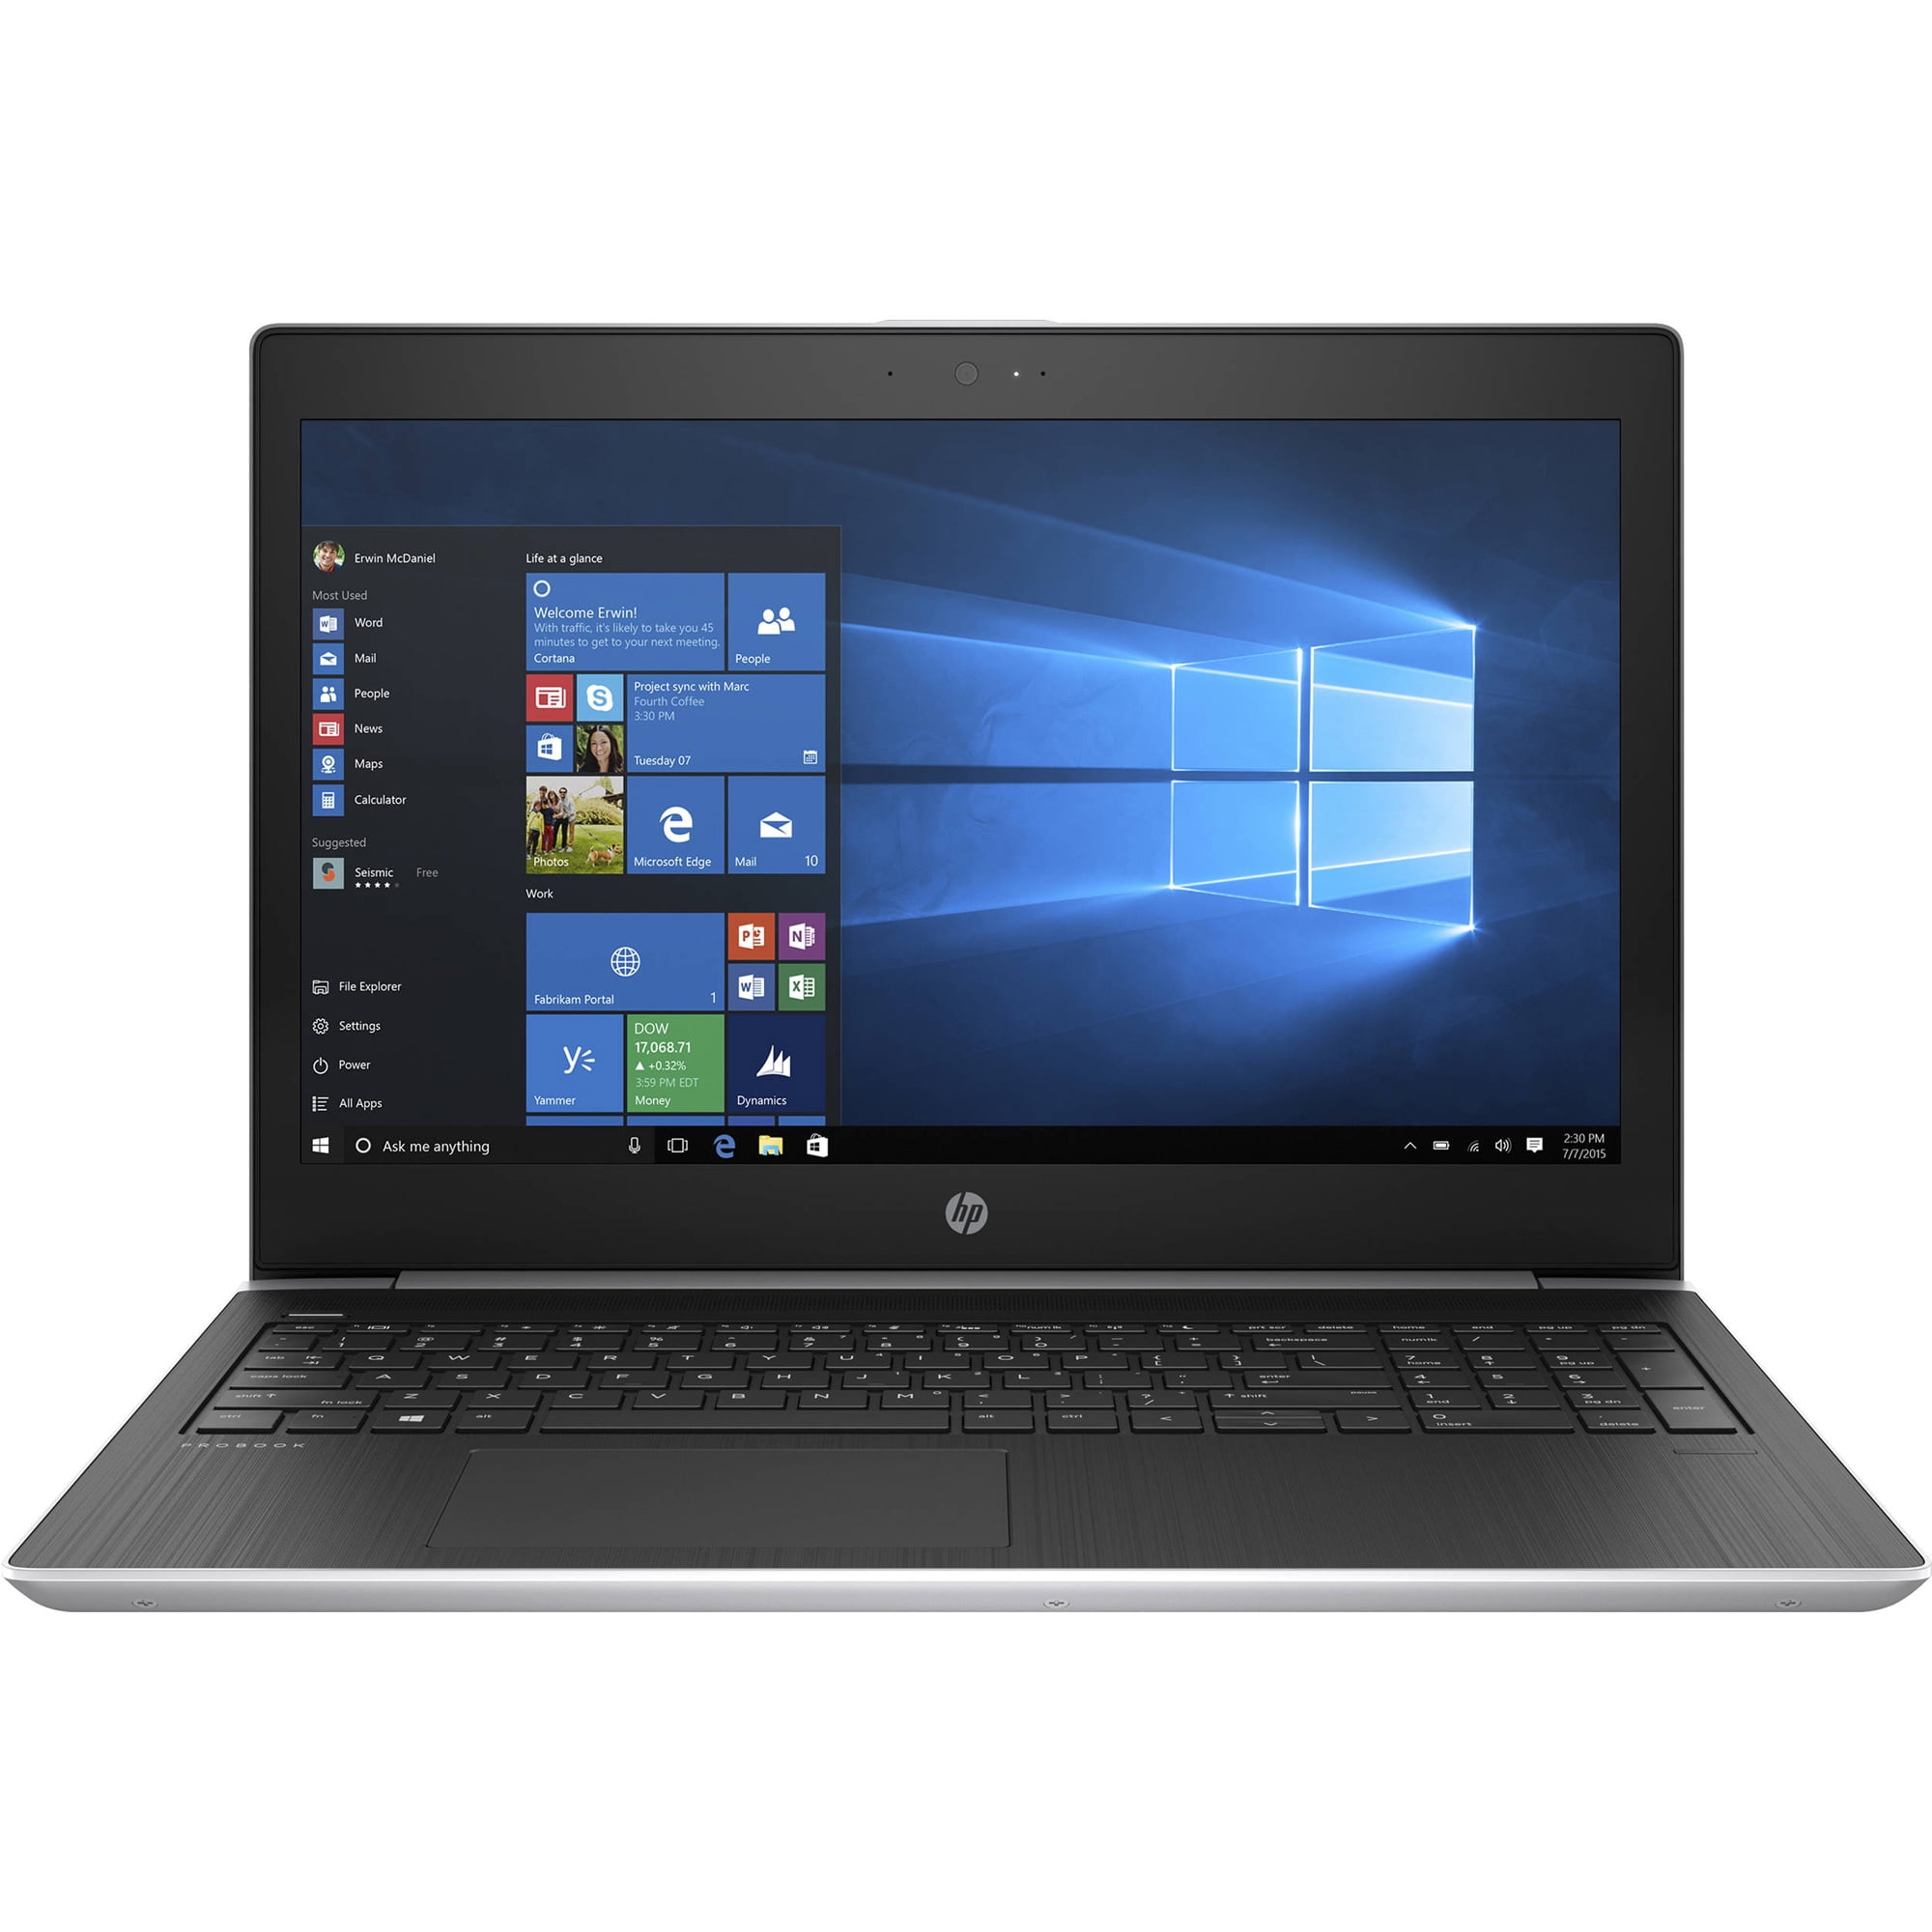 Restored HP ProBook 450 G5 Notebook PC (2TA27UT) Windows 10 Home 64 – HP  recommends Windows 10 Pro Intel Core i5-8250U with Intel UHD Graphics 620  (1.6 GHz 6 MB cache) 15.6 500 GB 4 GB DDR4-2400 SDRAM (Refurbished) -  Walmart.com